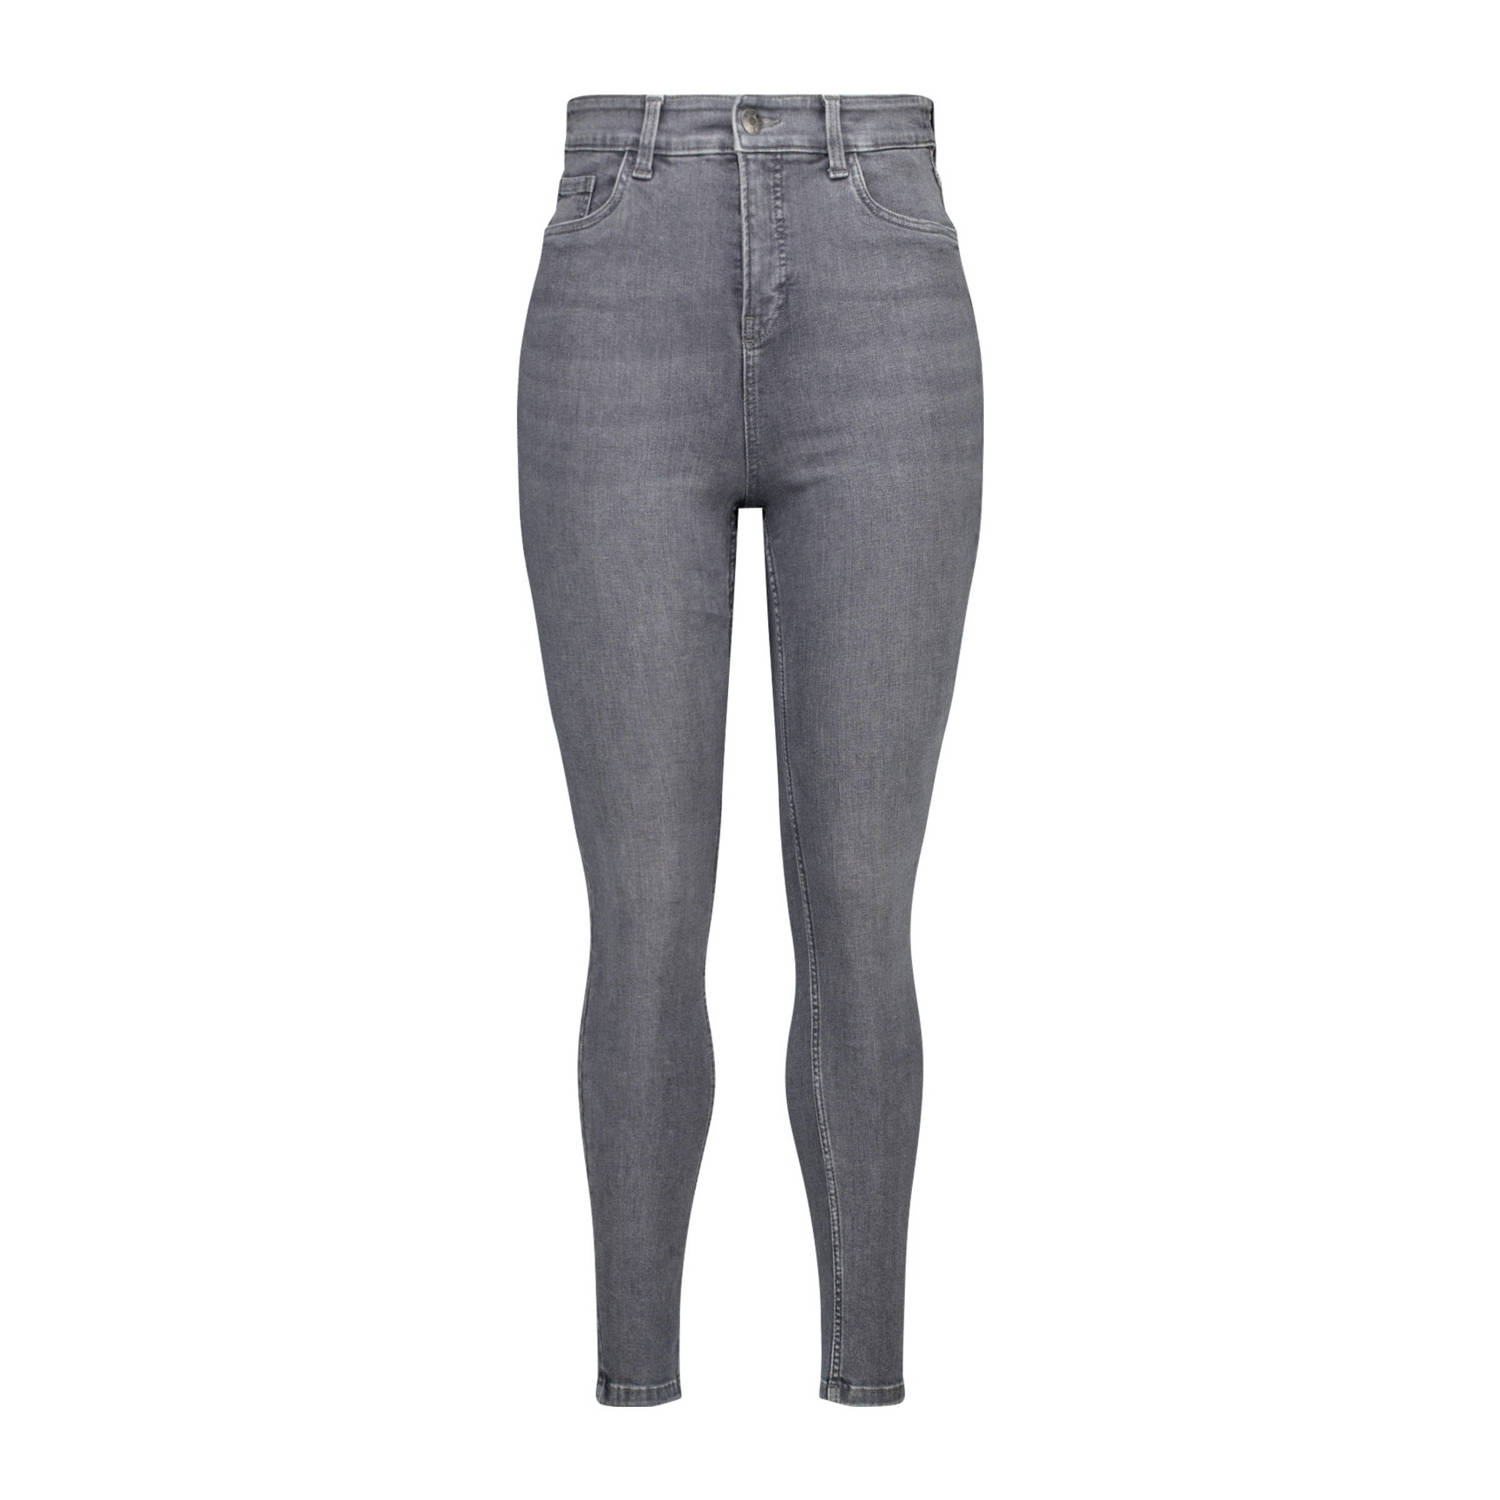 MS Mode high waist skinny jeans grey denim